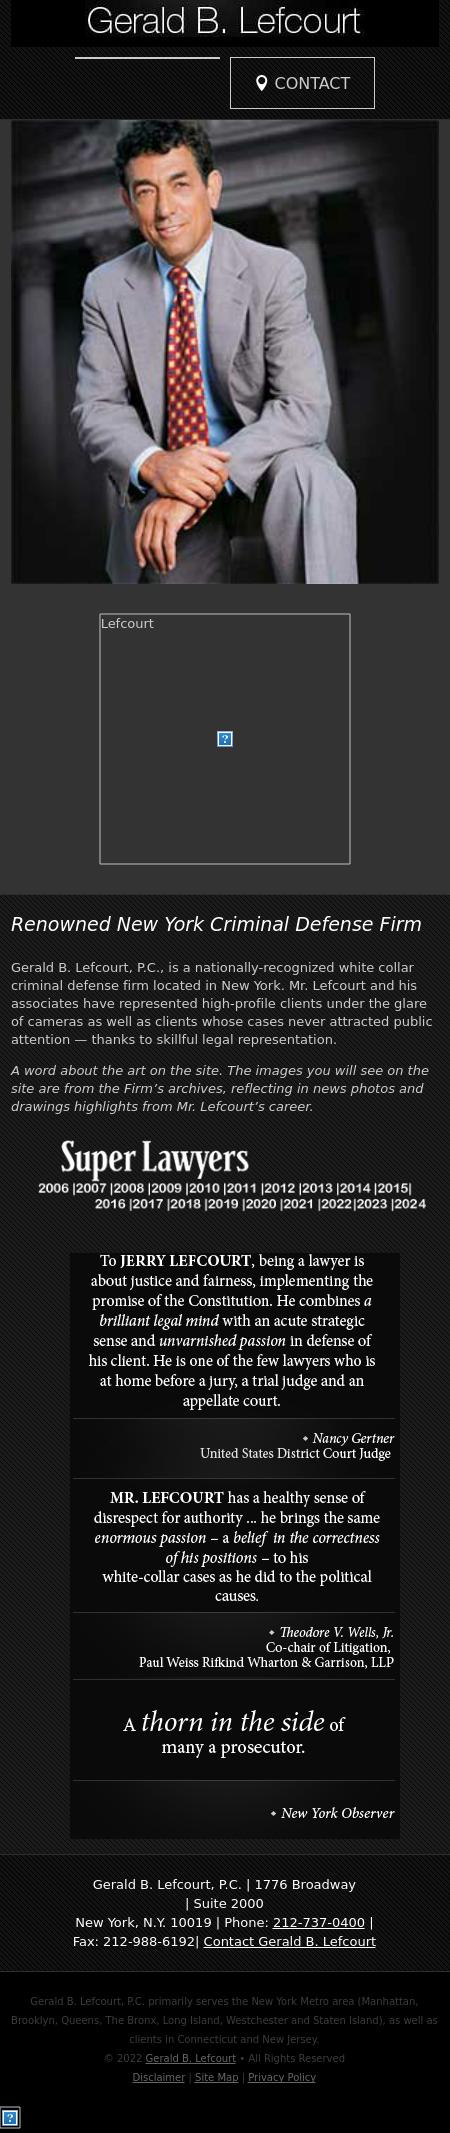 Gerald B. Lefcourt - New York NY Lawyers